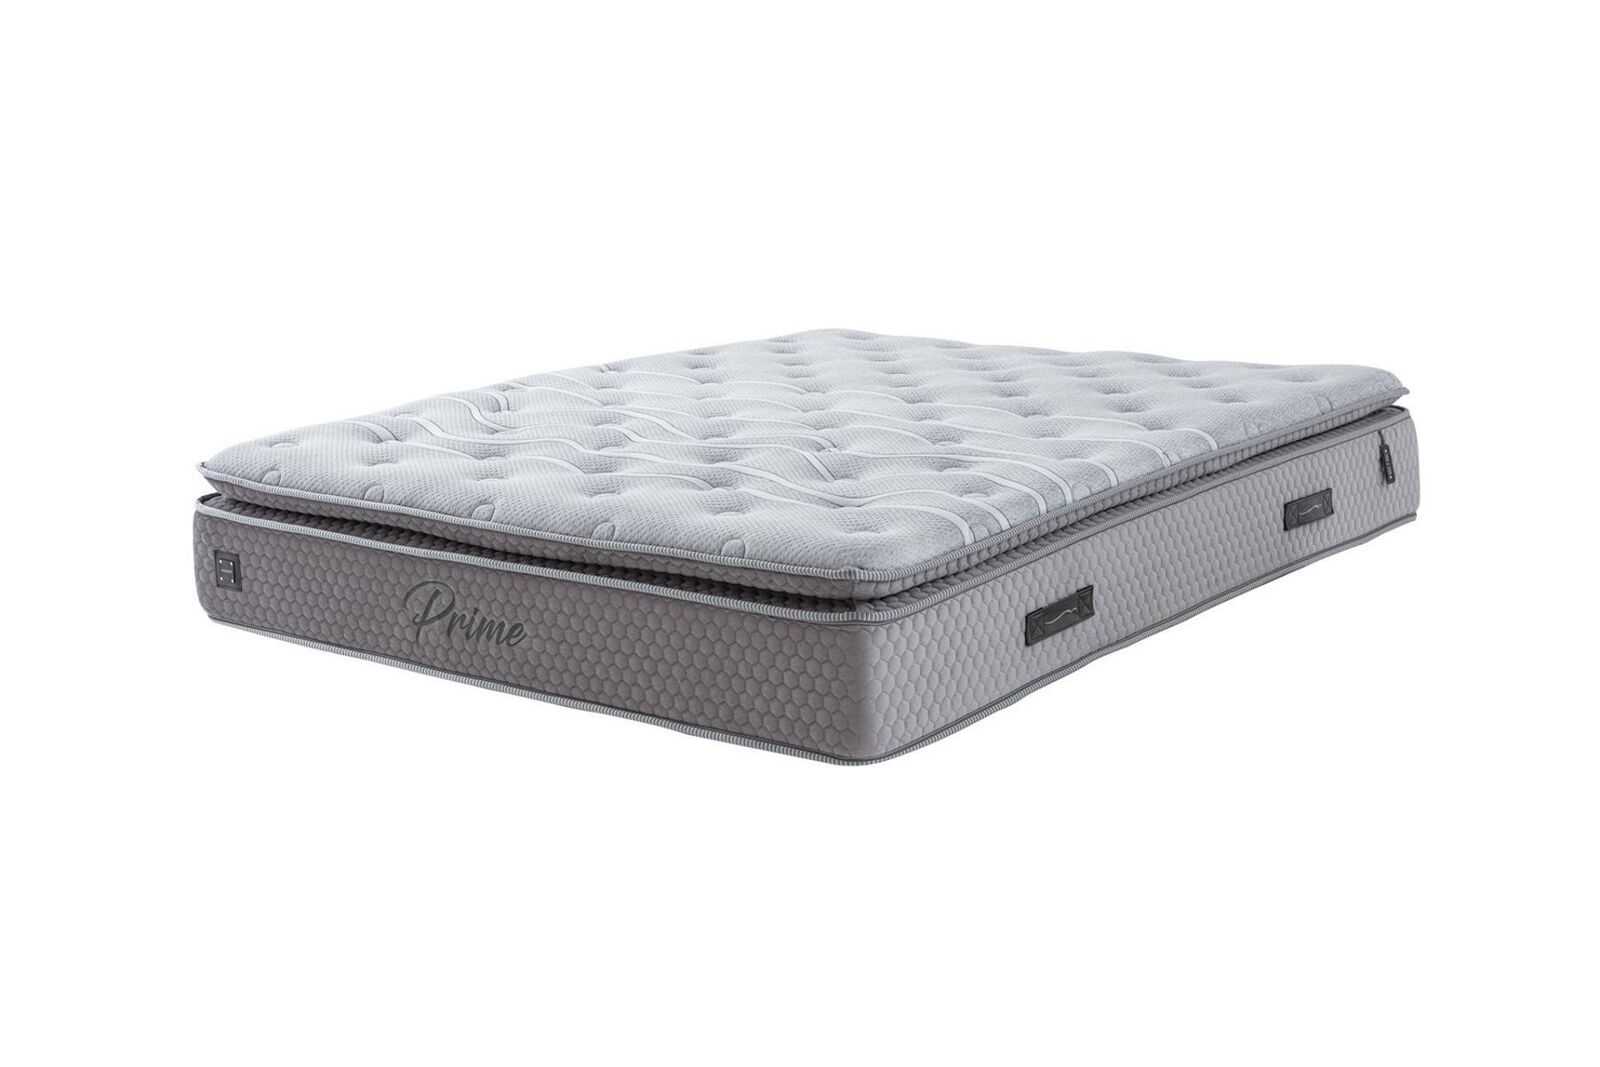 Bedroom mattress 200x200 foam orthopedic mattresses luxury